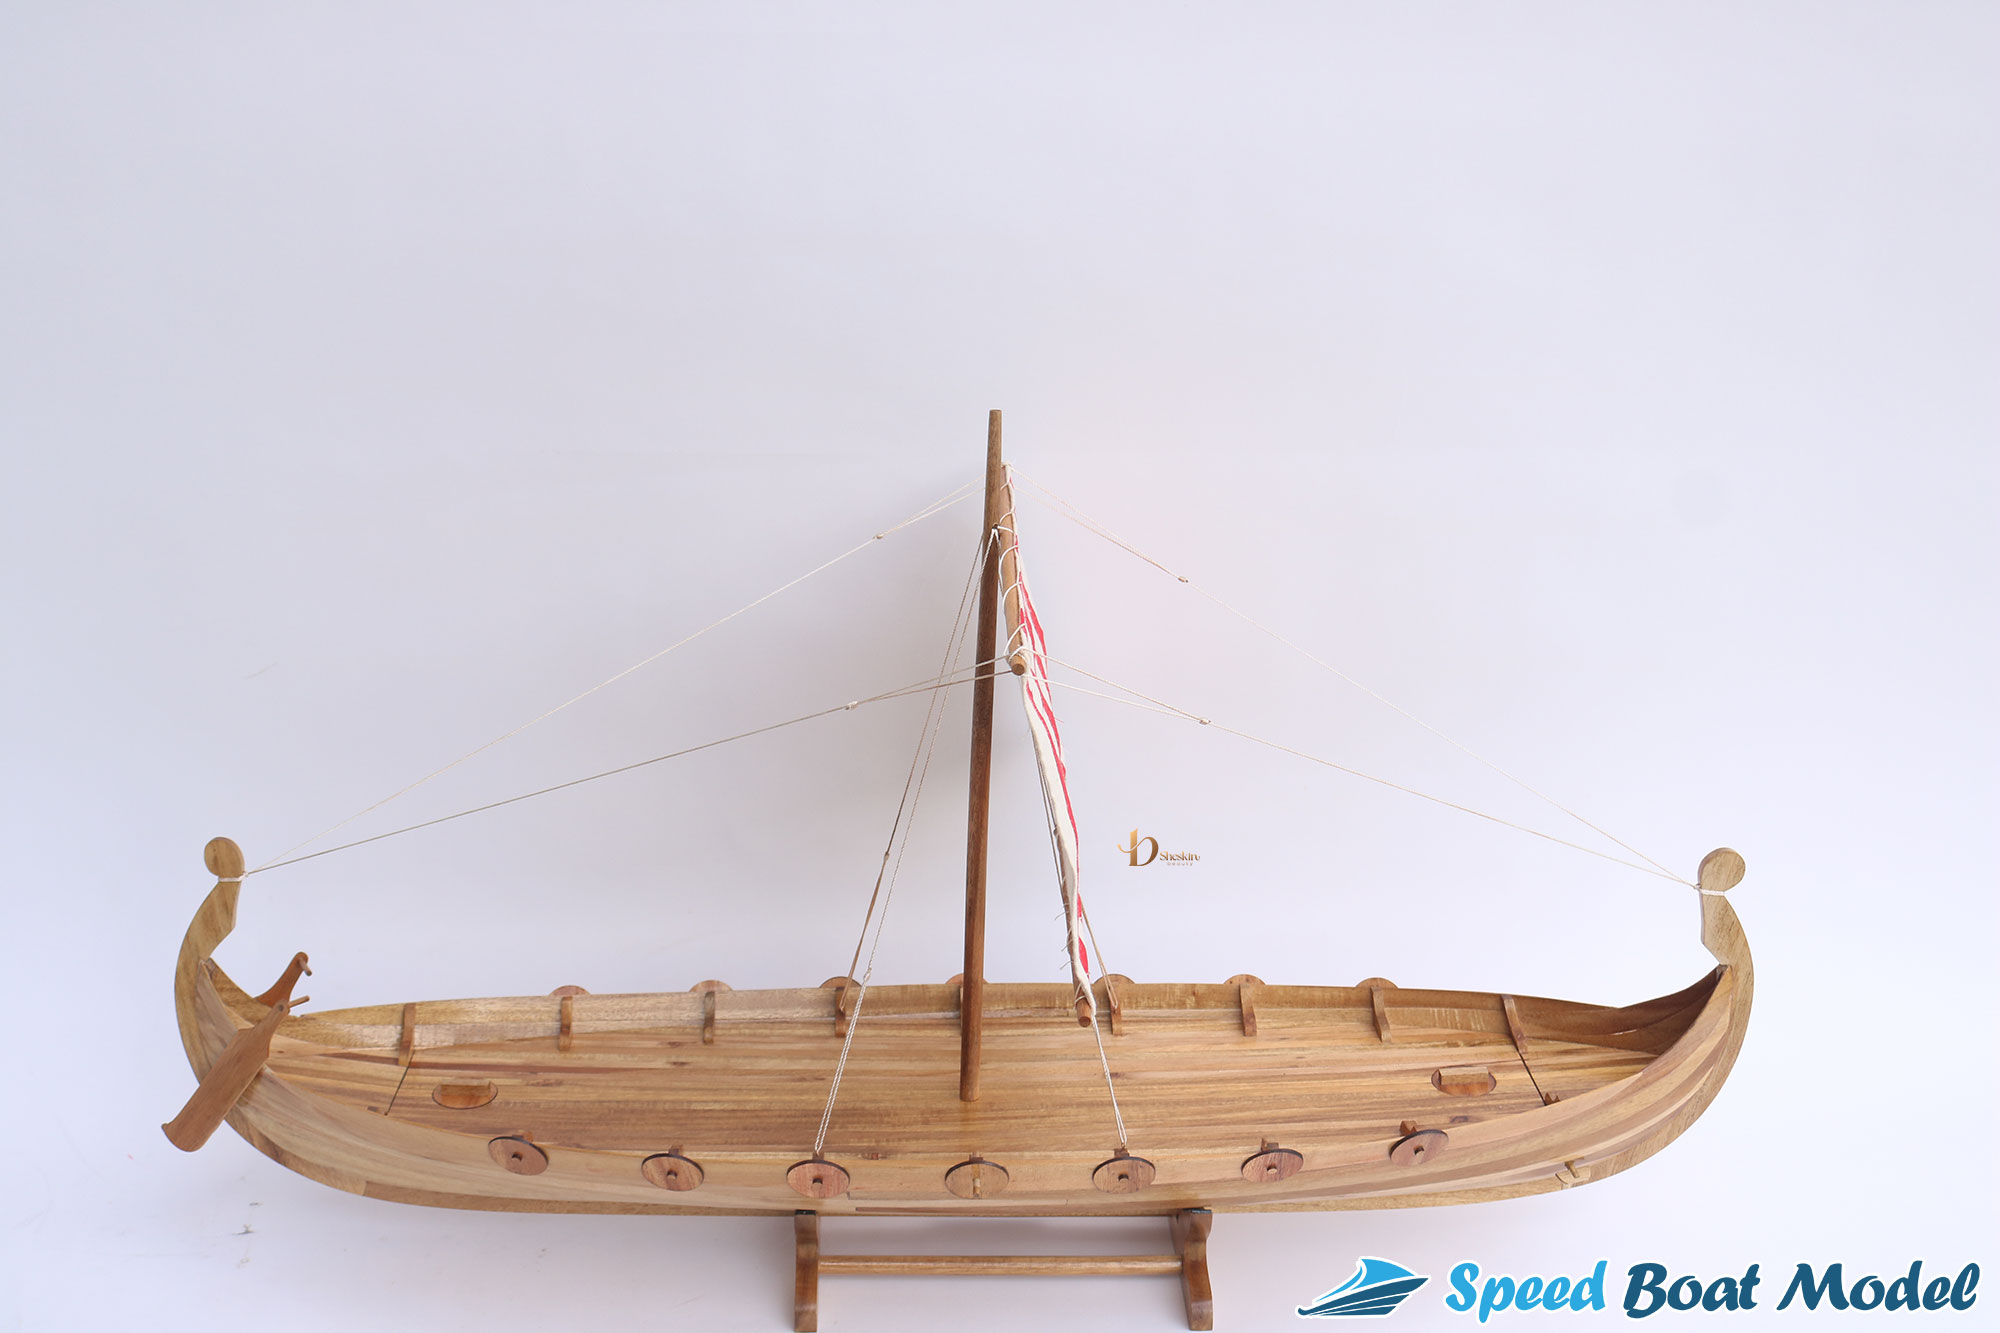 Viking Traditional Boat Model 32.2"